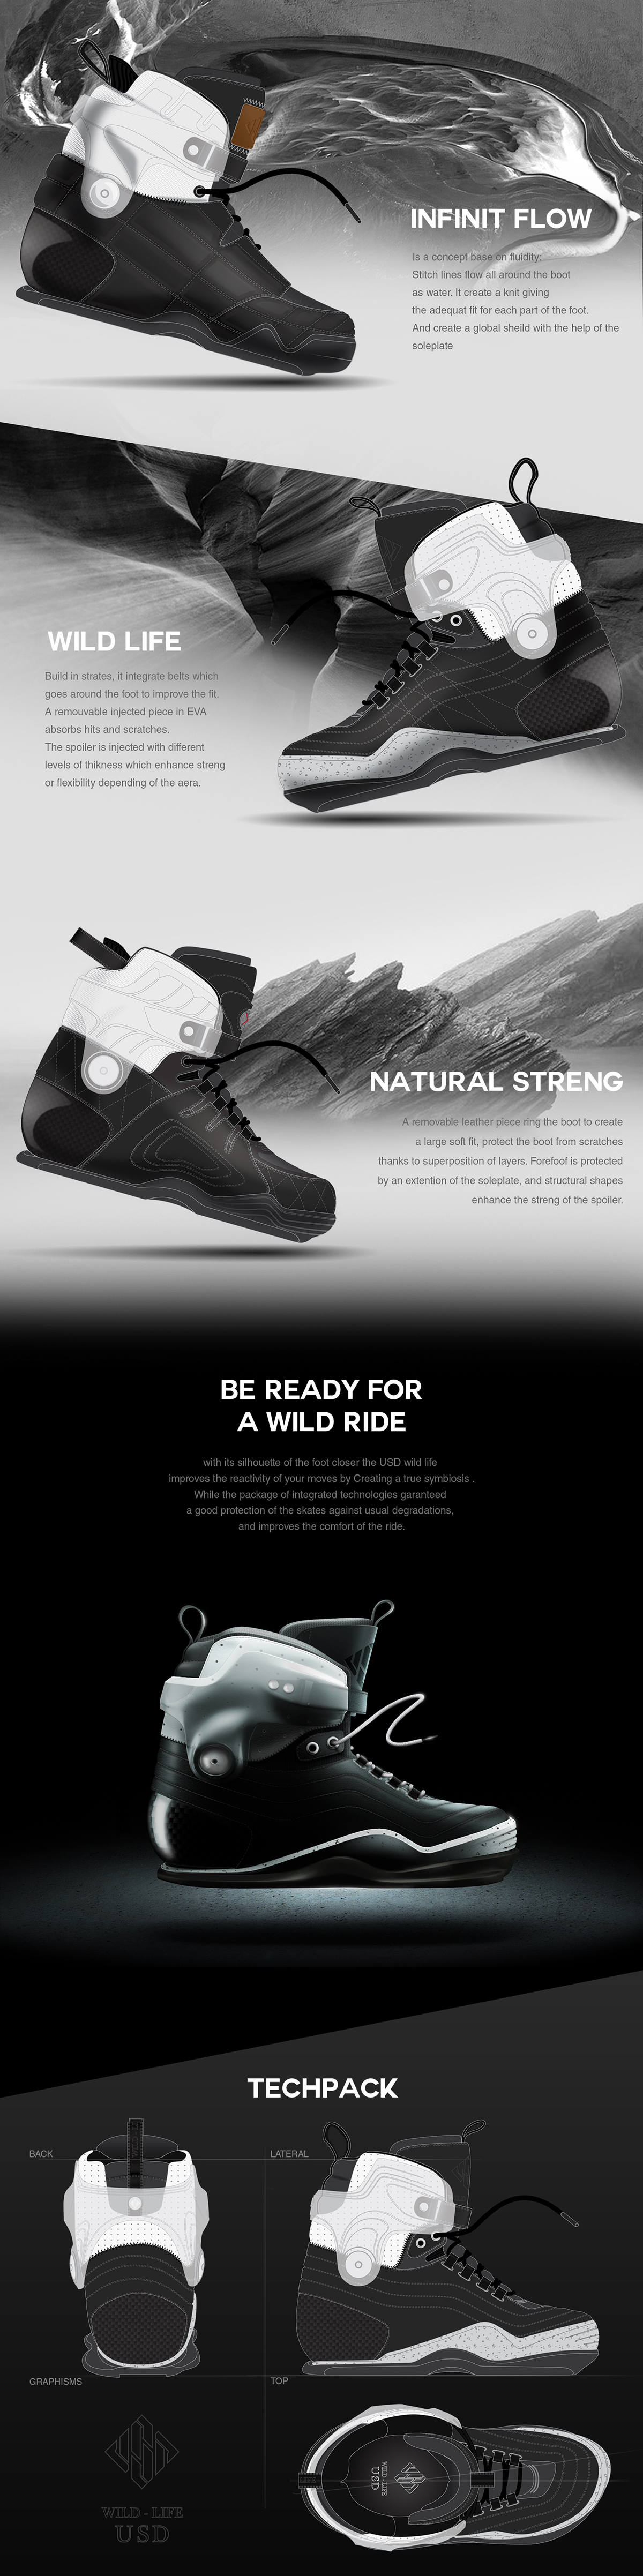 usd skates skate inline skates footwear design van tichelen marc ISD industrialdesign conceptkiks